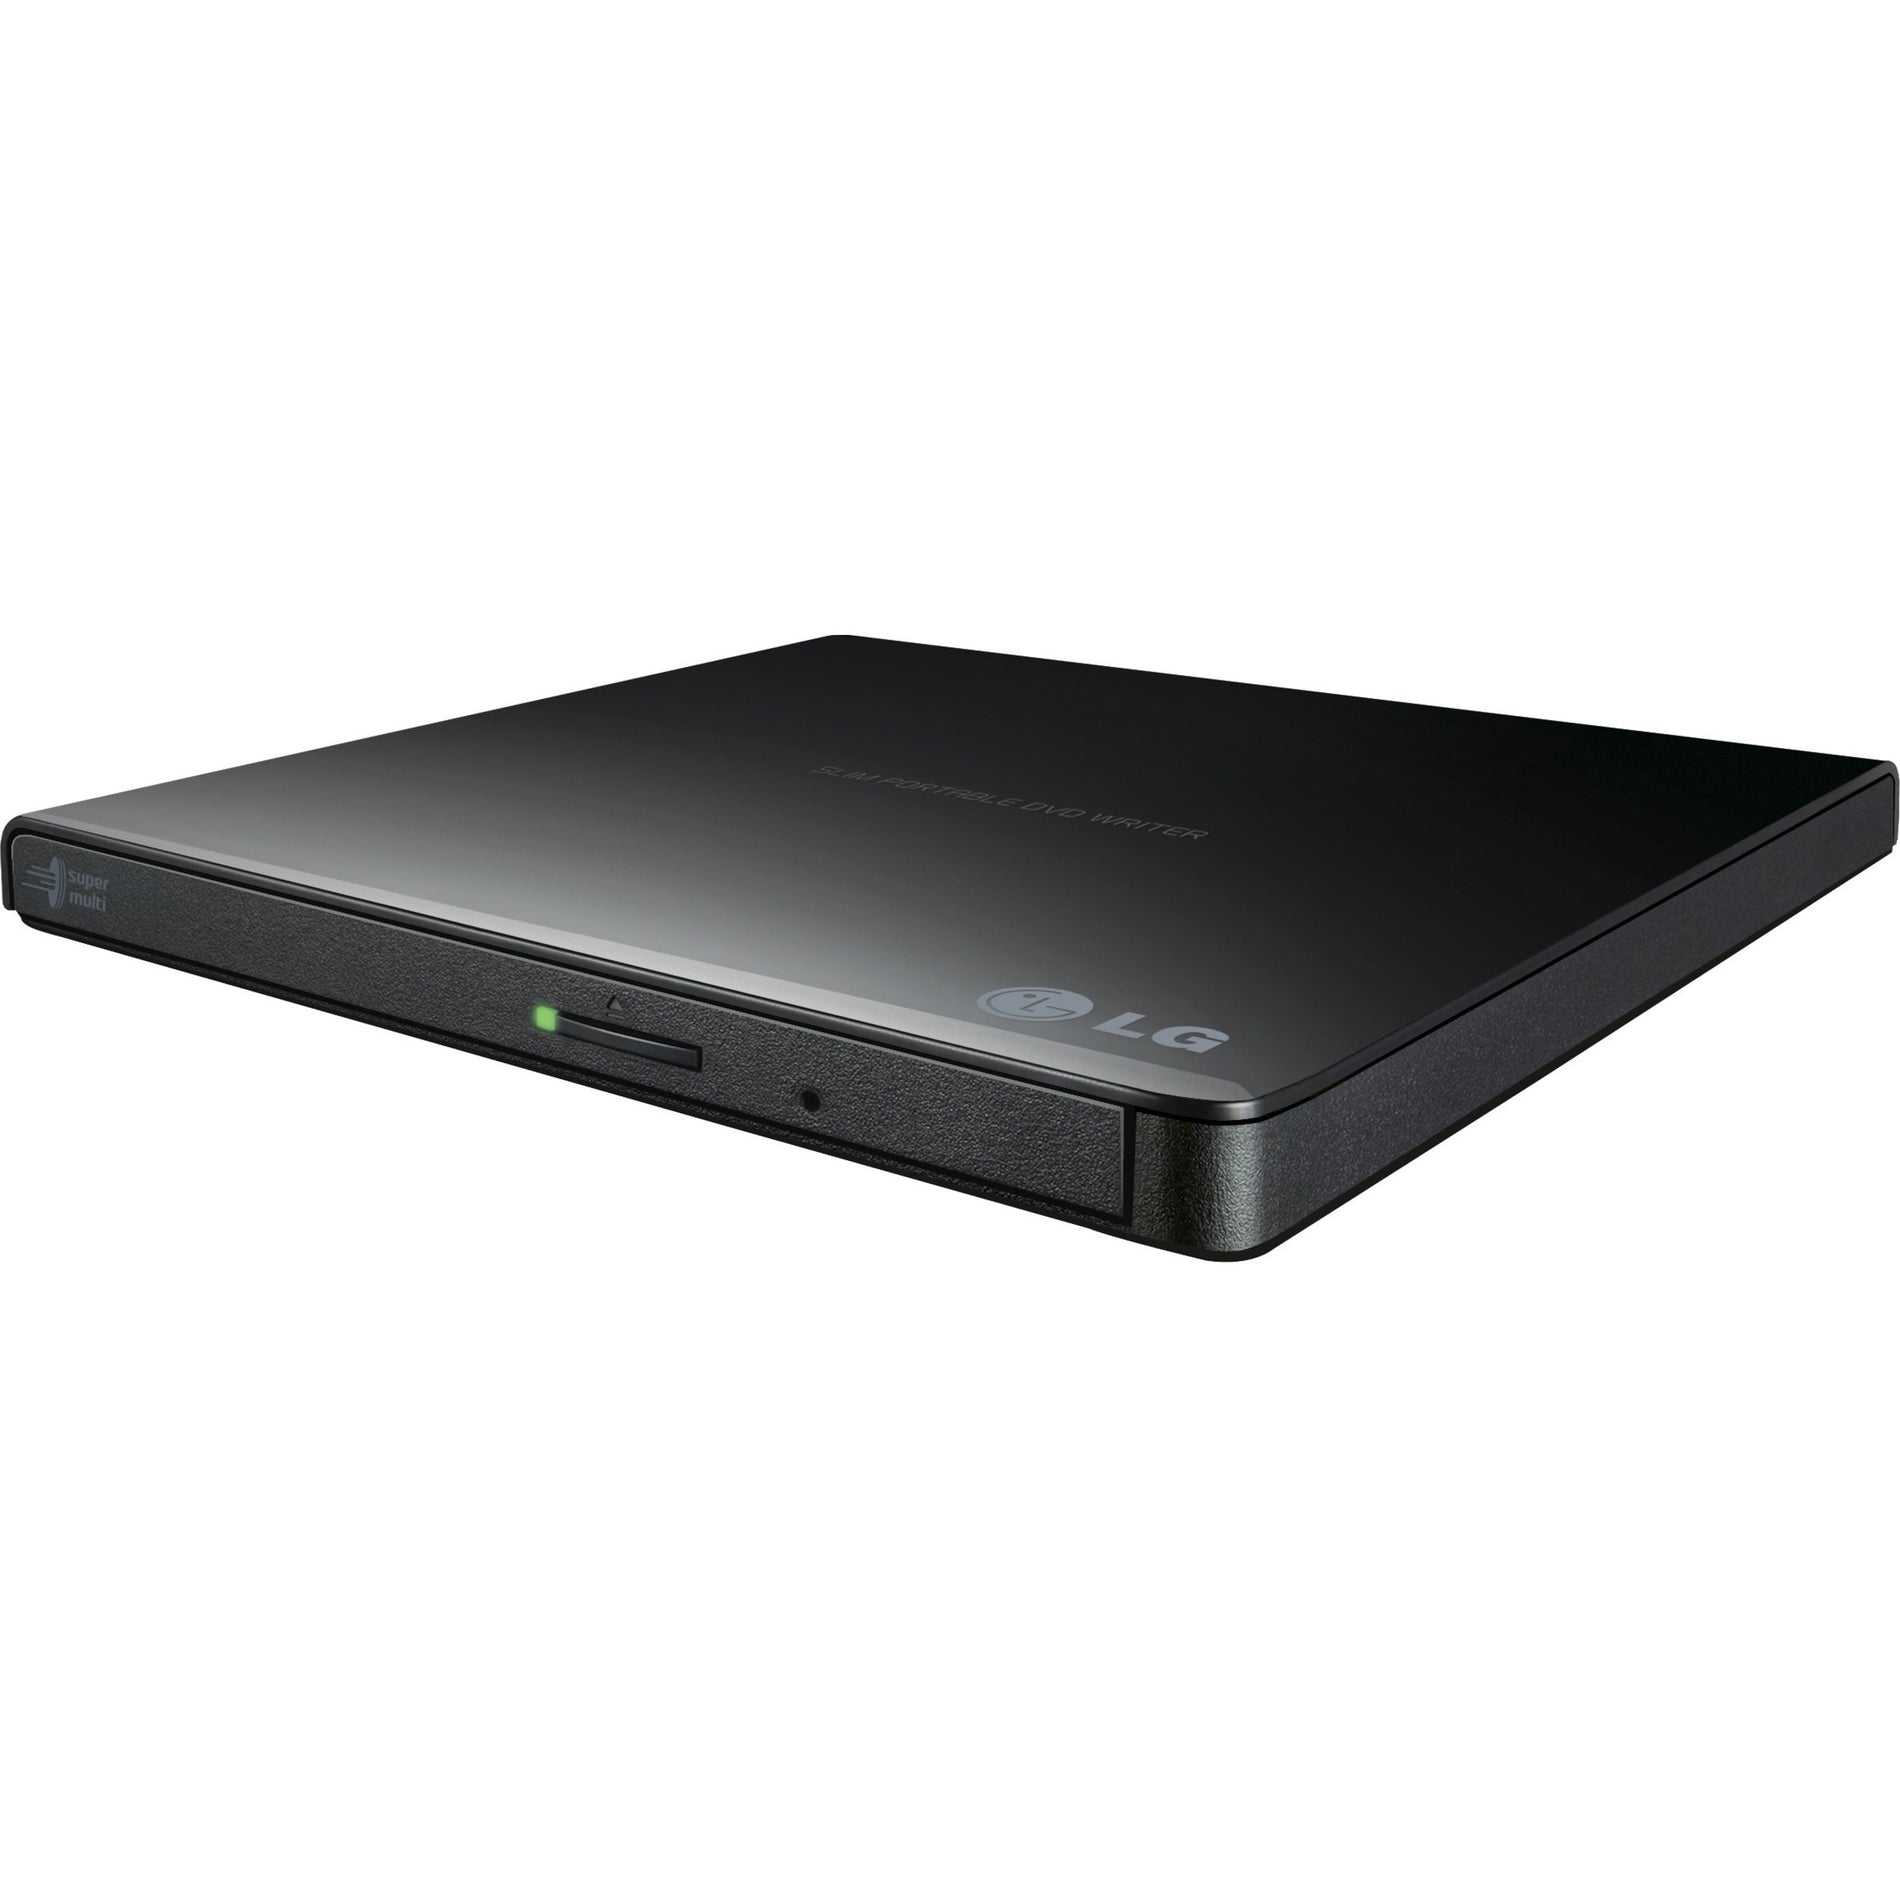 LG GP65NB60 Ultra-Slim Portable DVD Burner & Drive with M-DISC Support, External DVD-Writer - Black